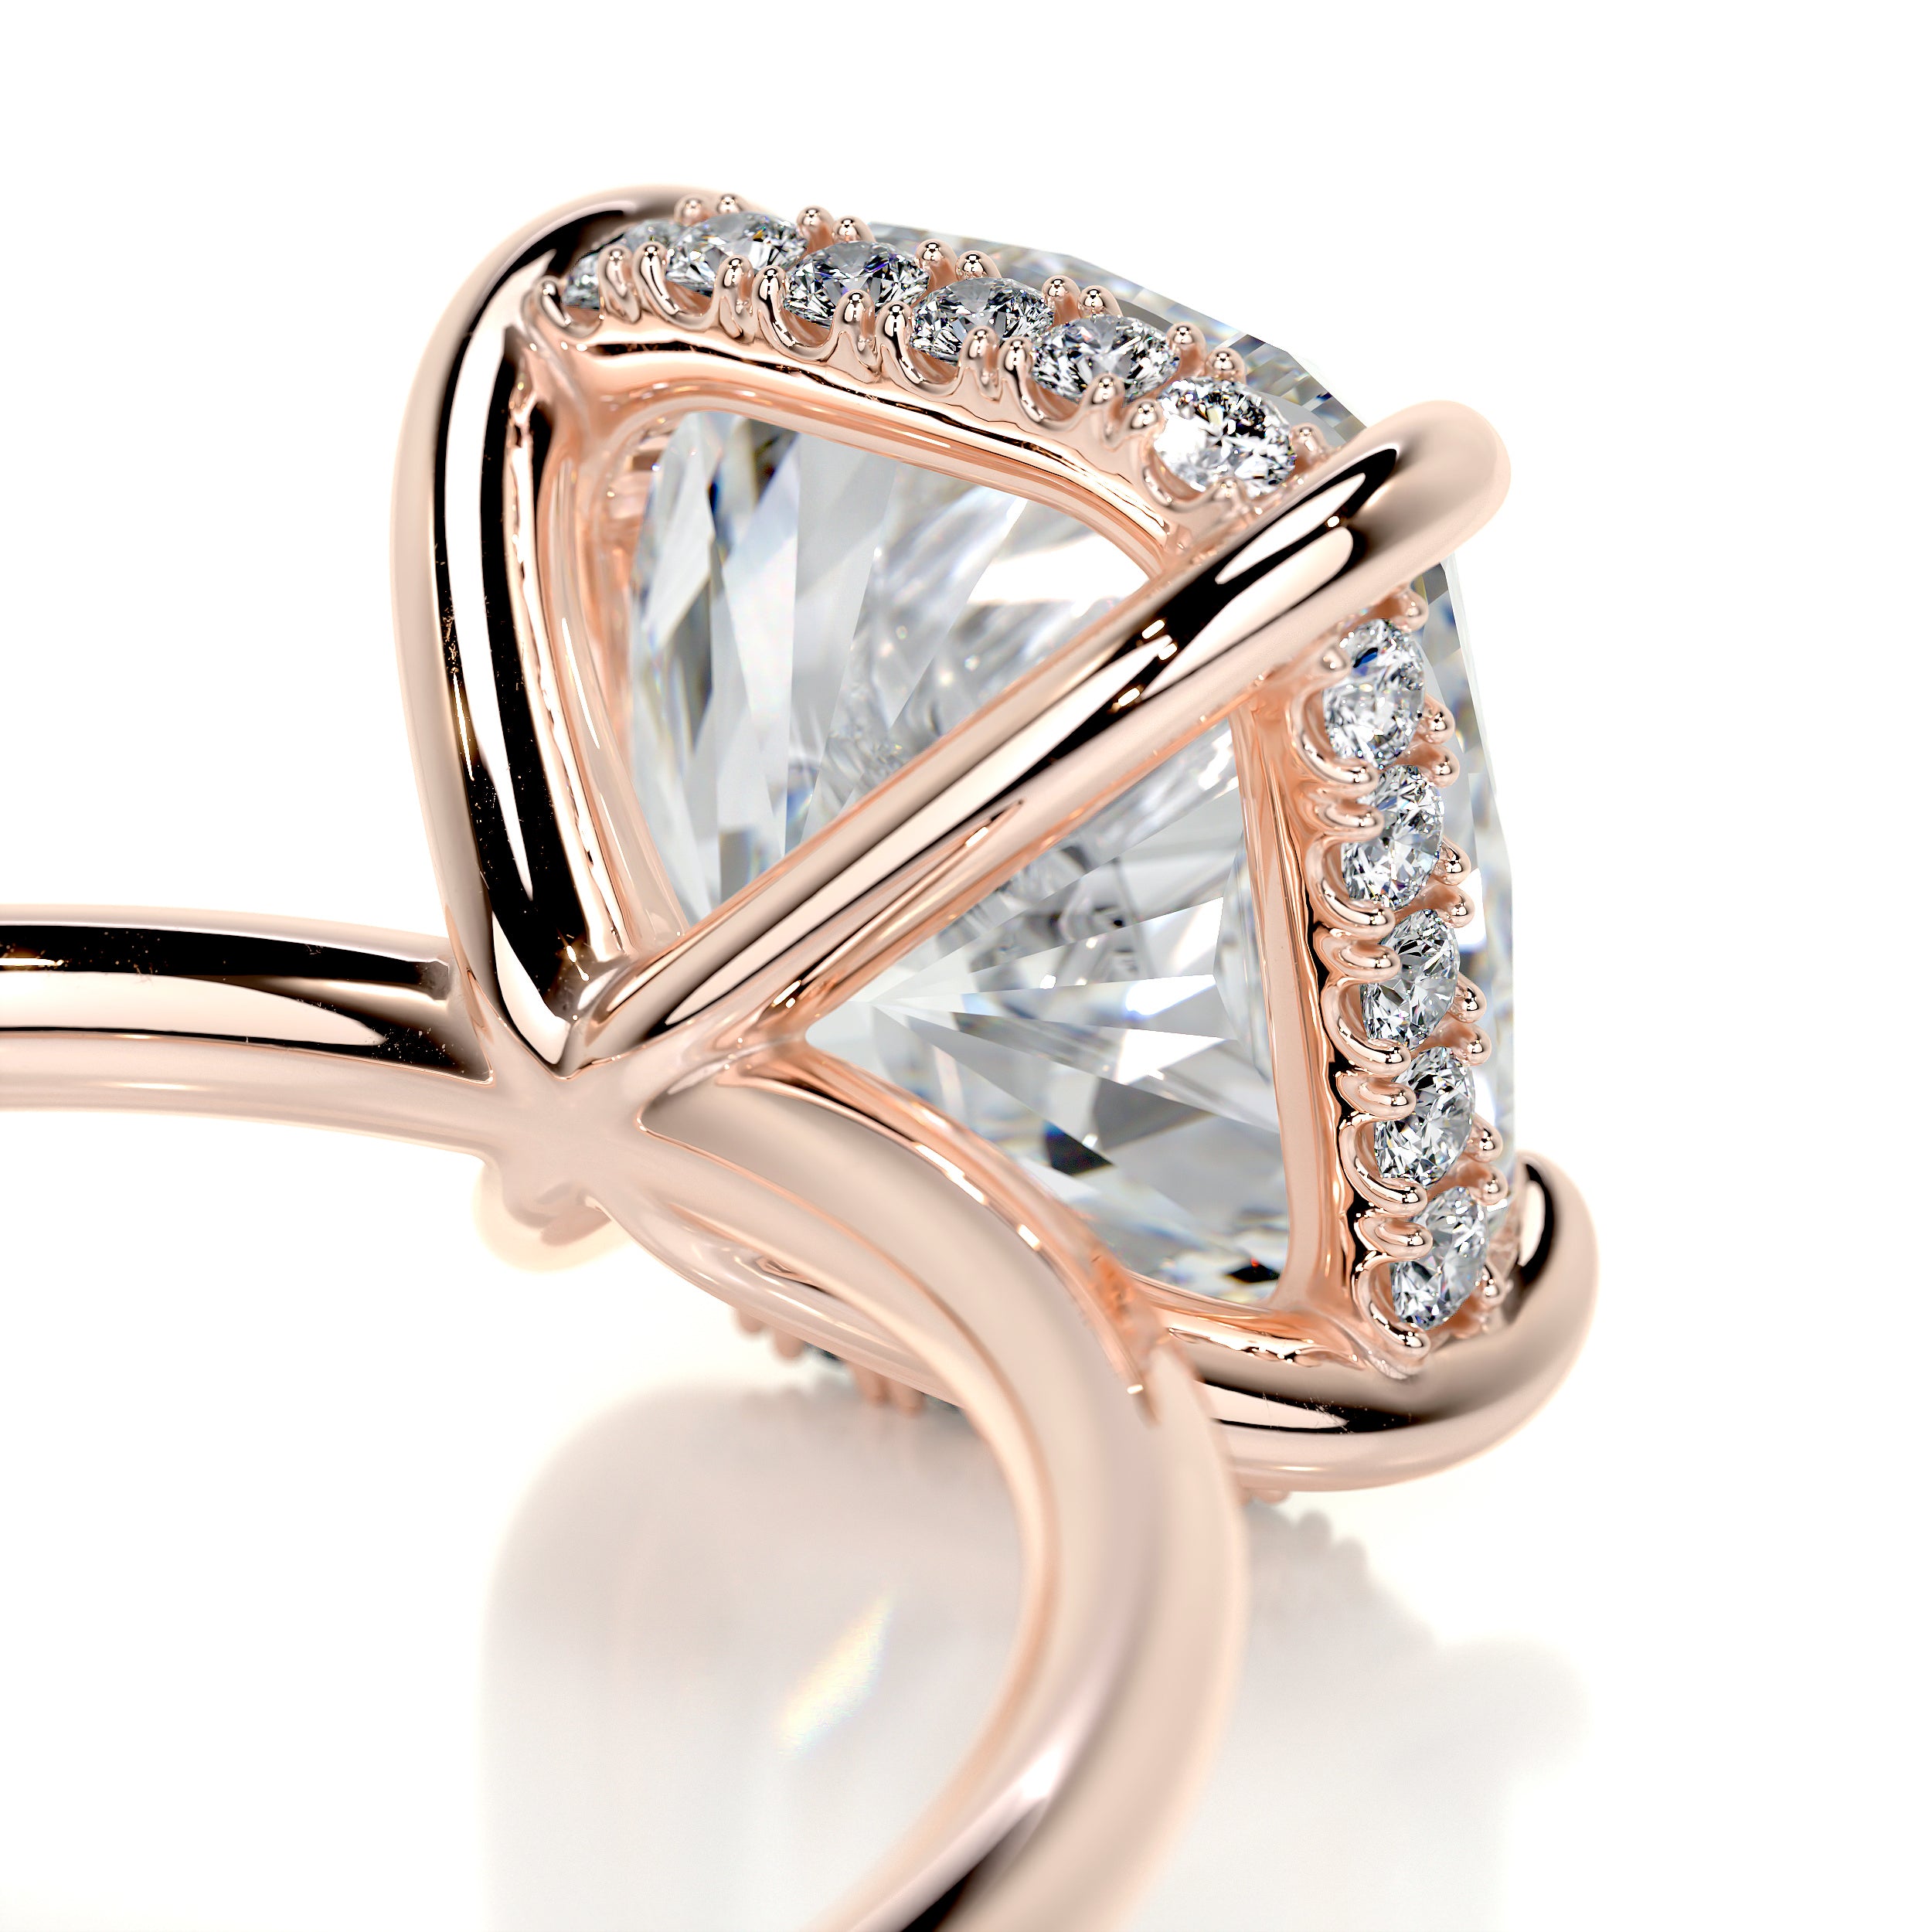 Priscilla Diamond Engagement Ring   (3.1 Carat) -14K Rose Gold